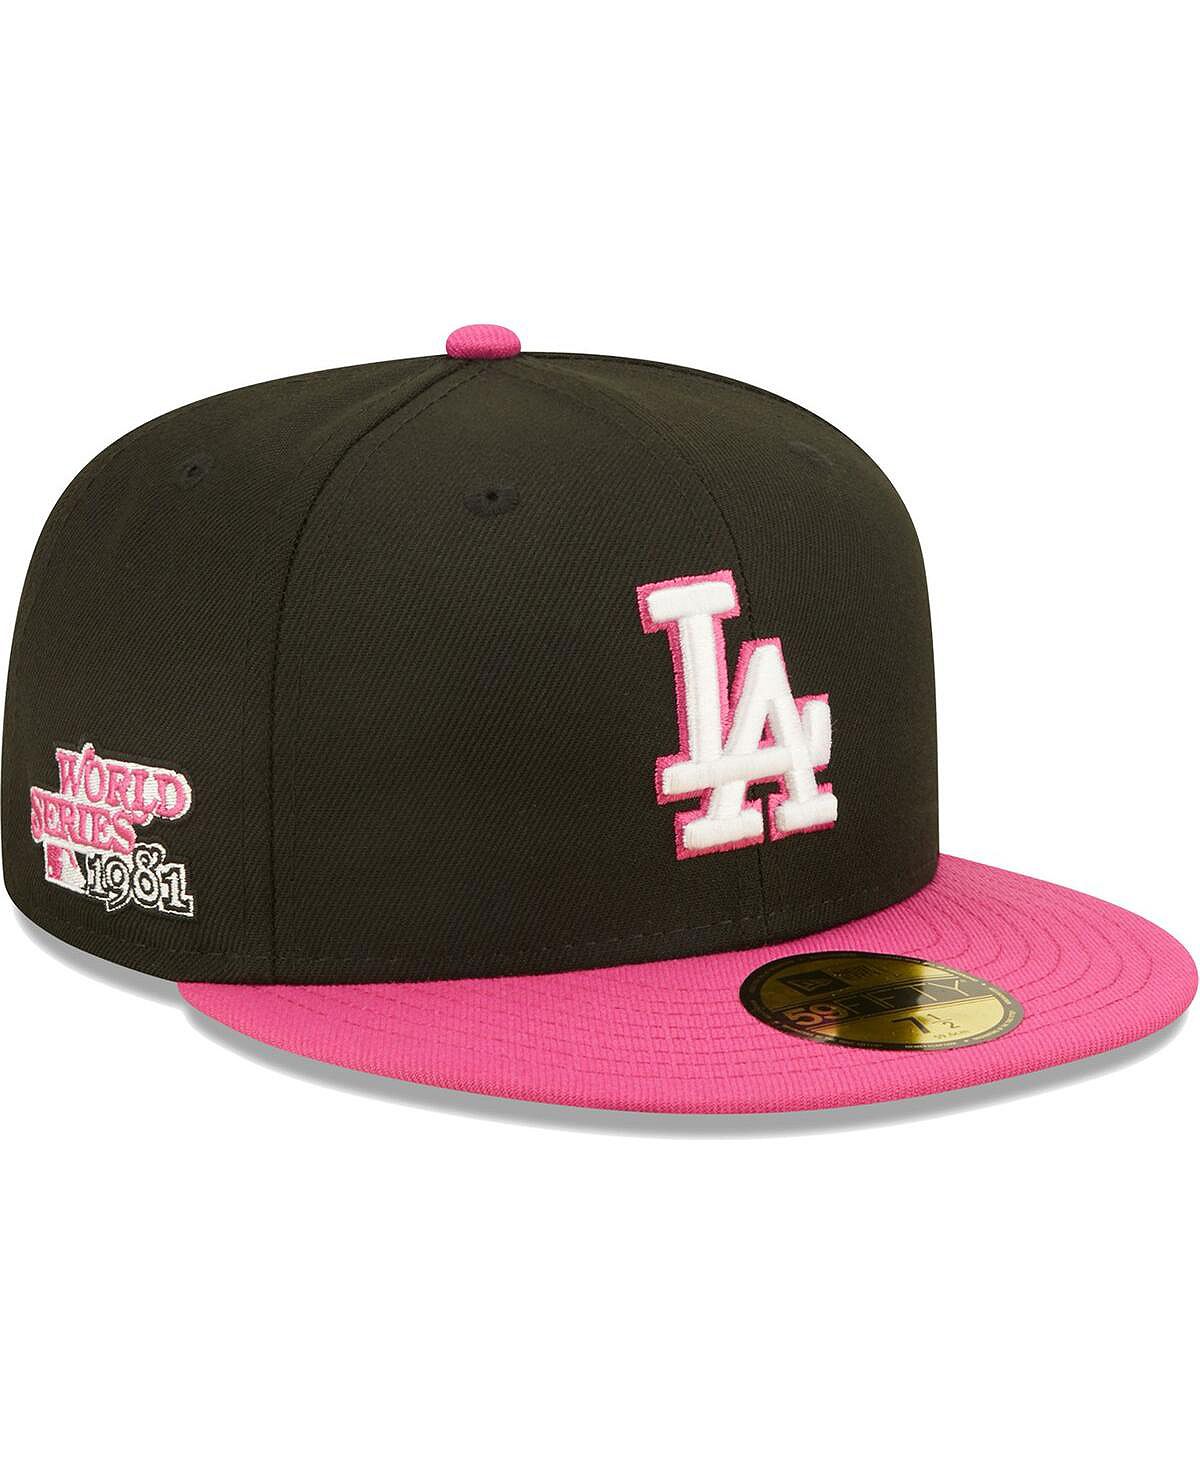 Мужская шляпа черного и розового цвета Los Angeles Dodgers 1981 World Series Champions Passion 59FIFTY. New Era